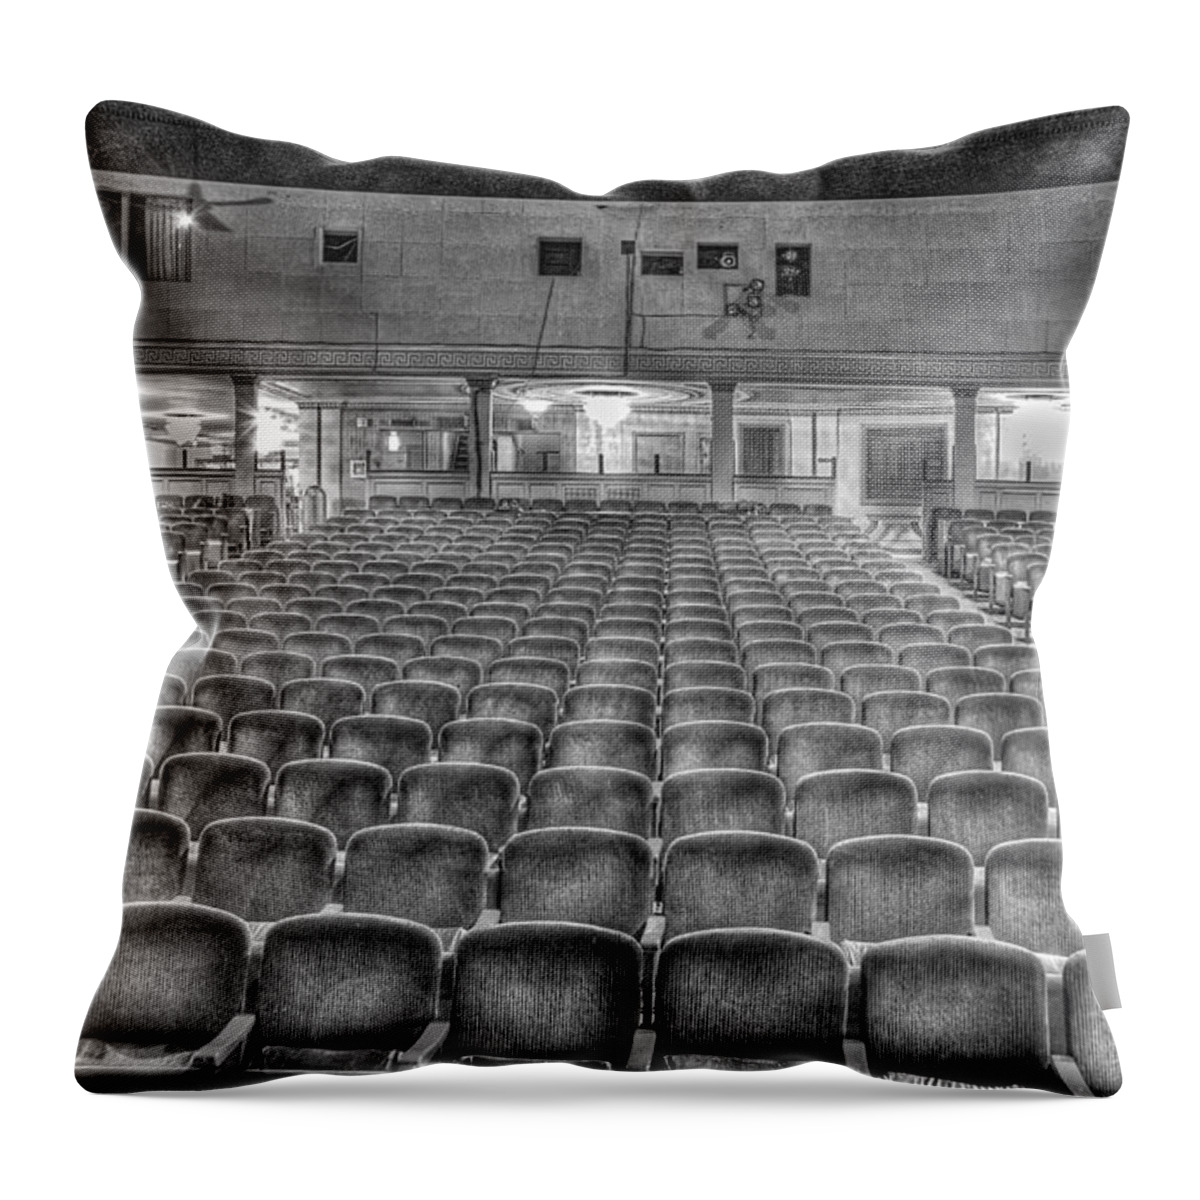  Throw Pillow featuring the photograph Senate Theatre Seating Detroit MI by Nicholas Grunas